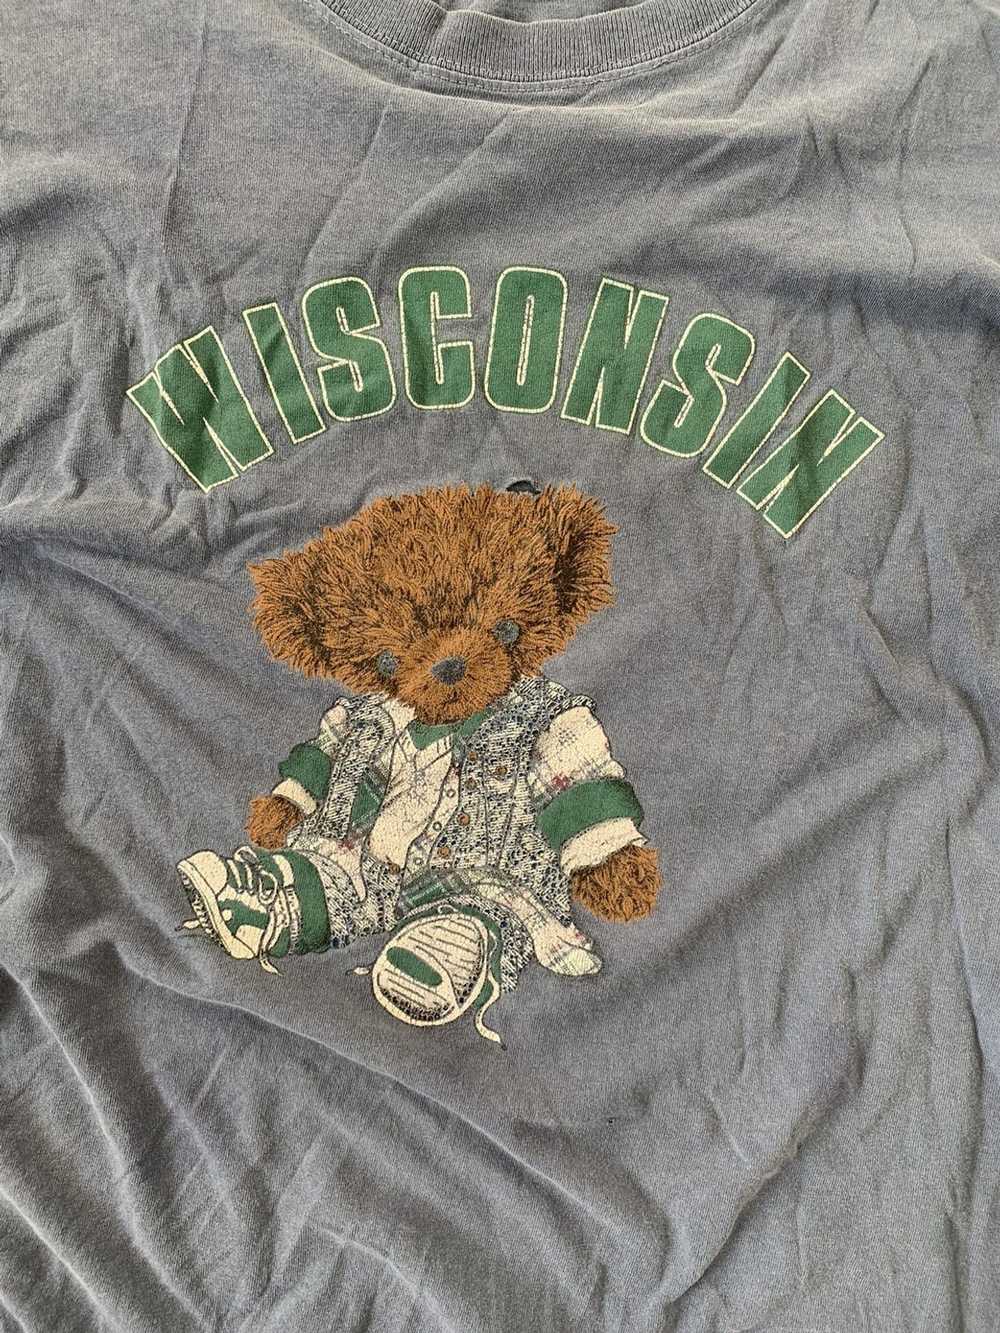 Vintage Vintage Wisconsin Teddy Bear T shirt - image 2